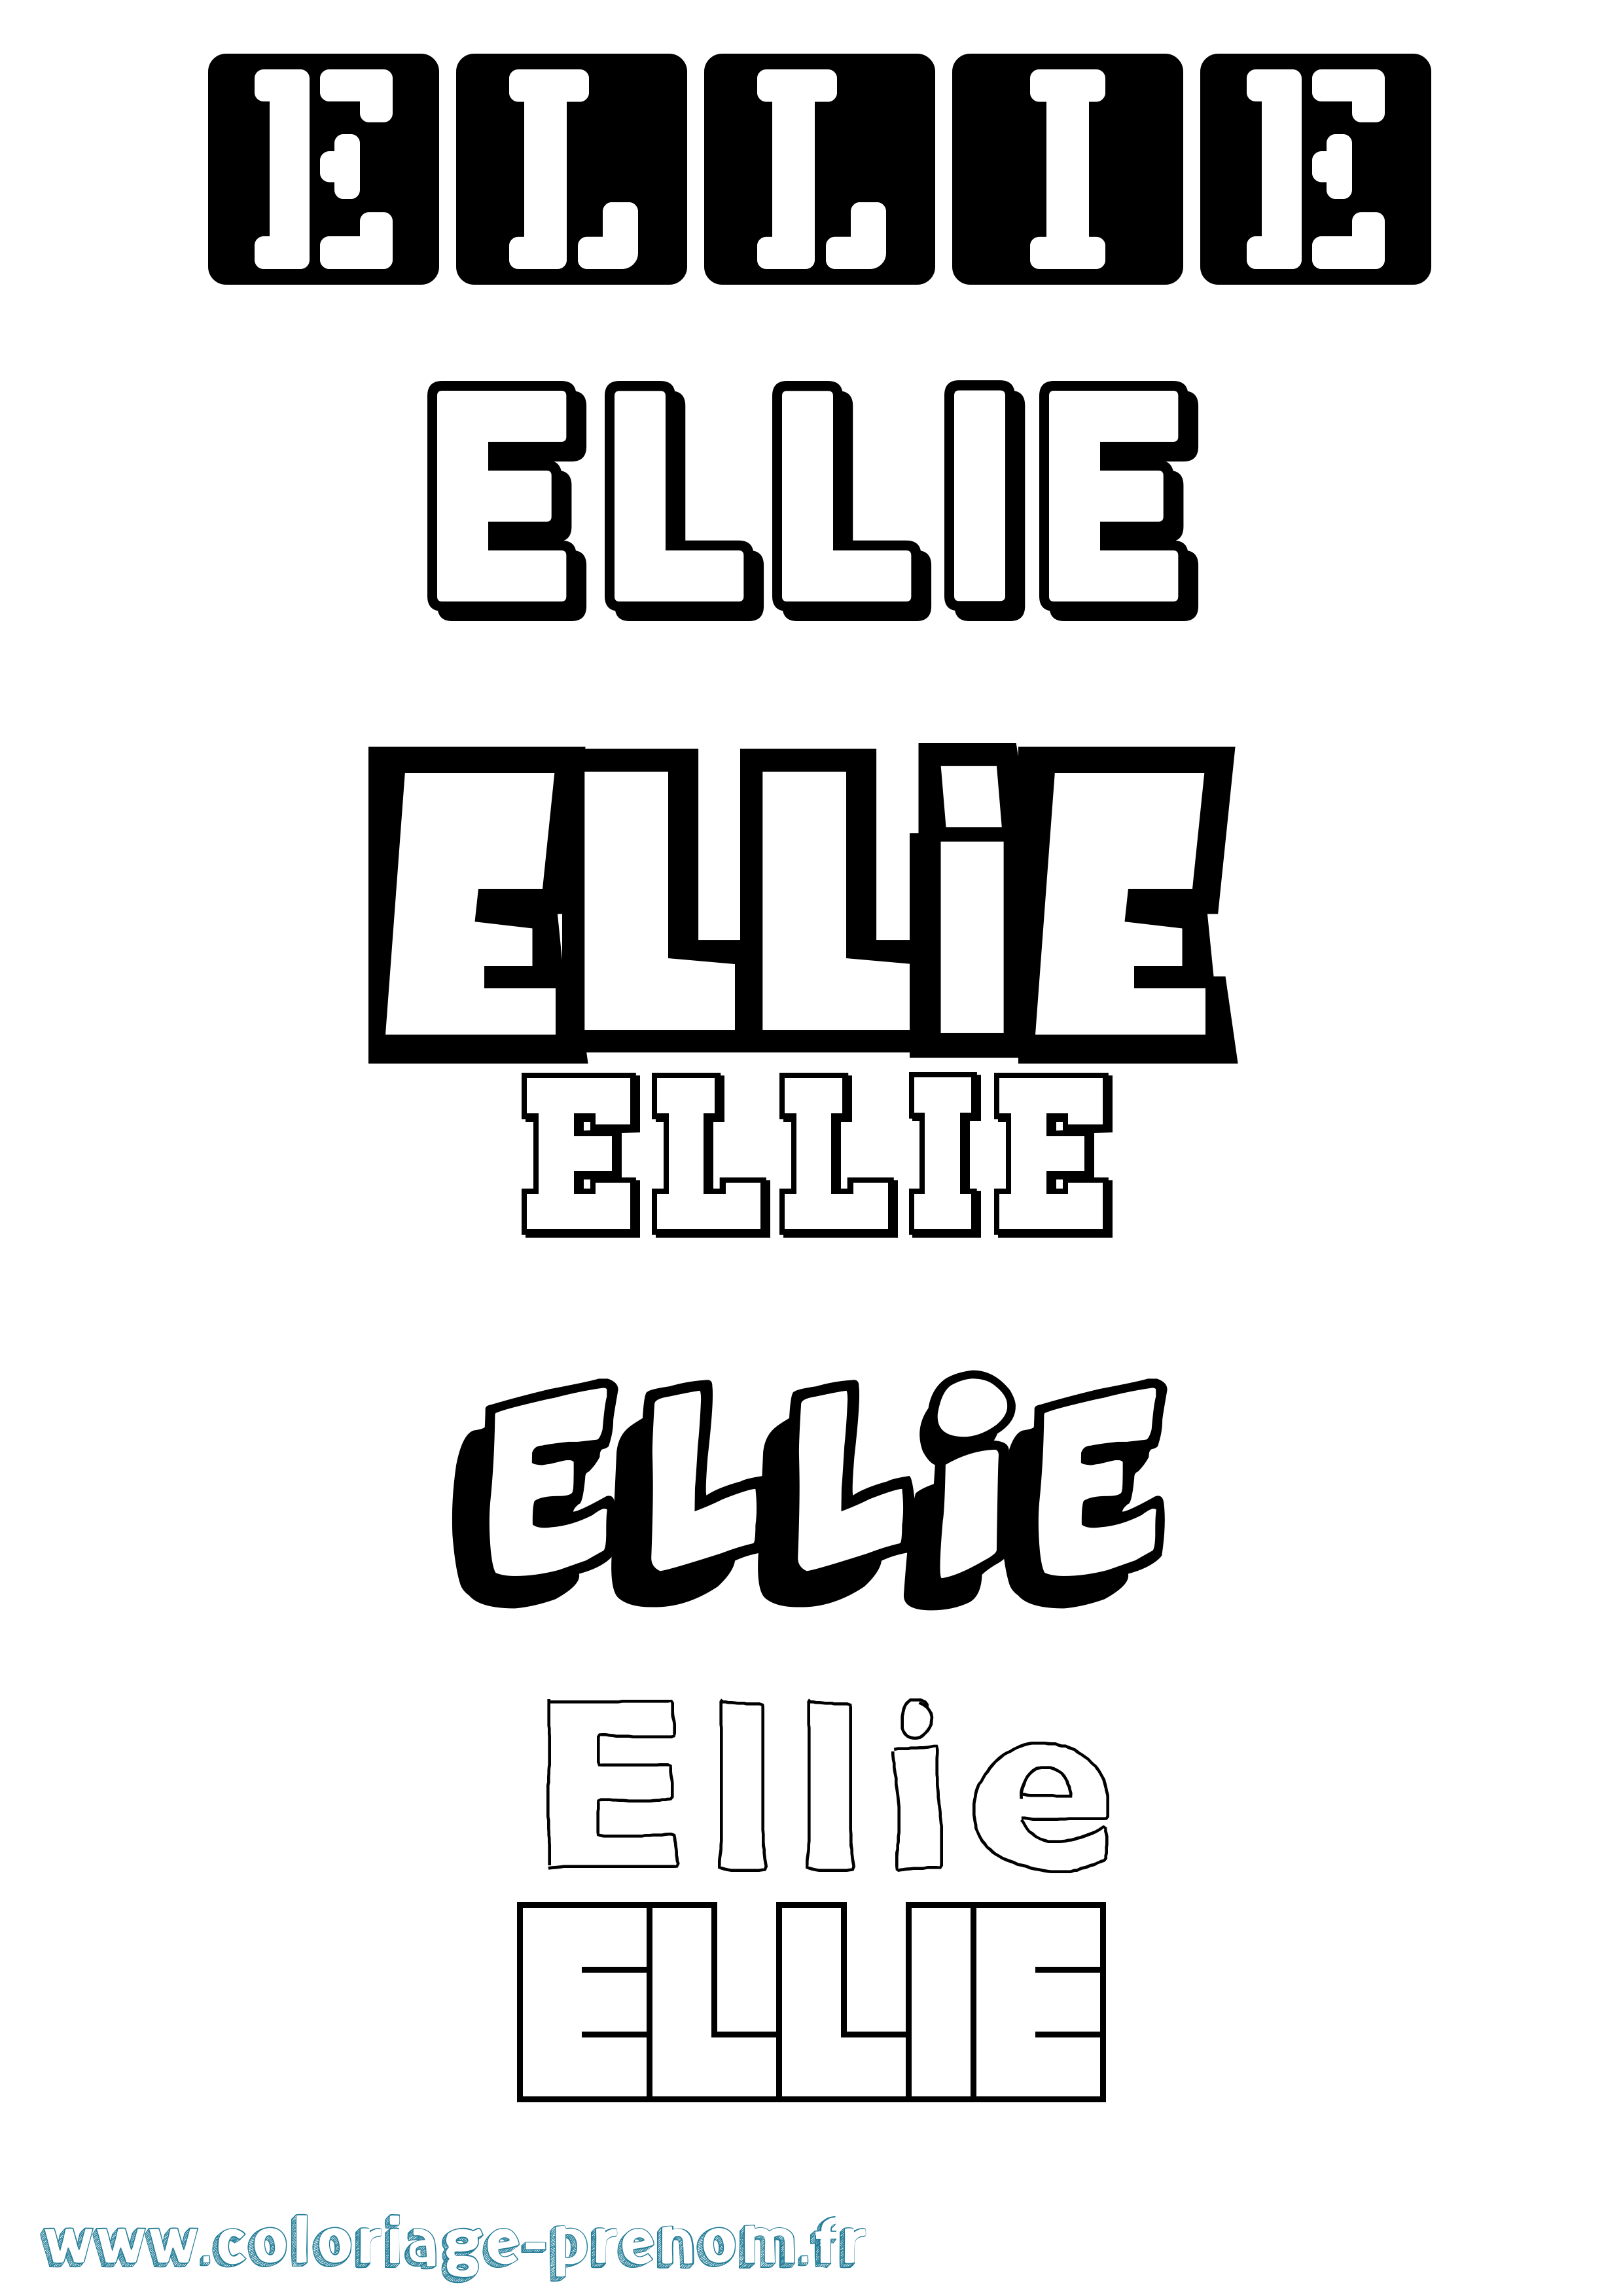 Coloriage prénom Ellie Simple